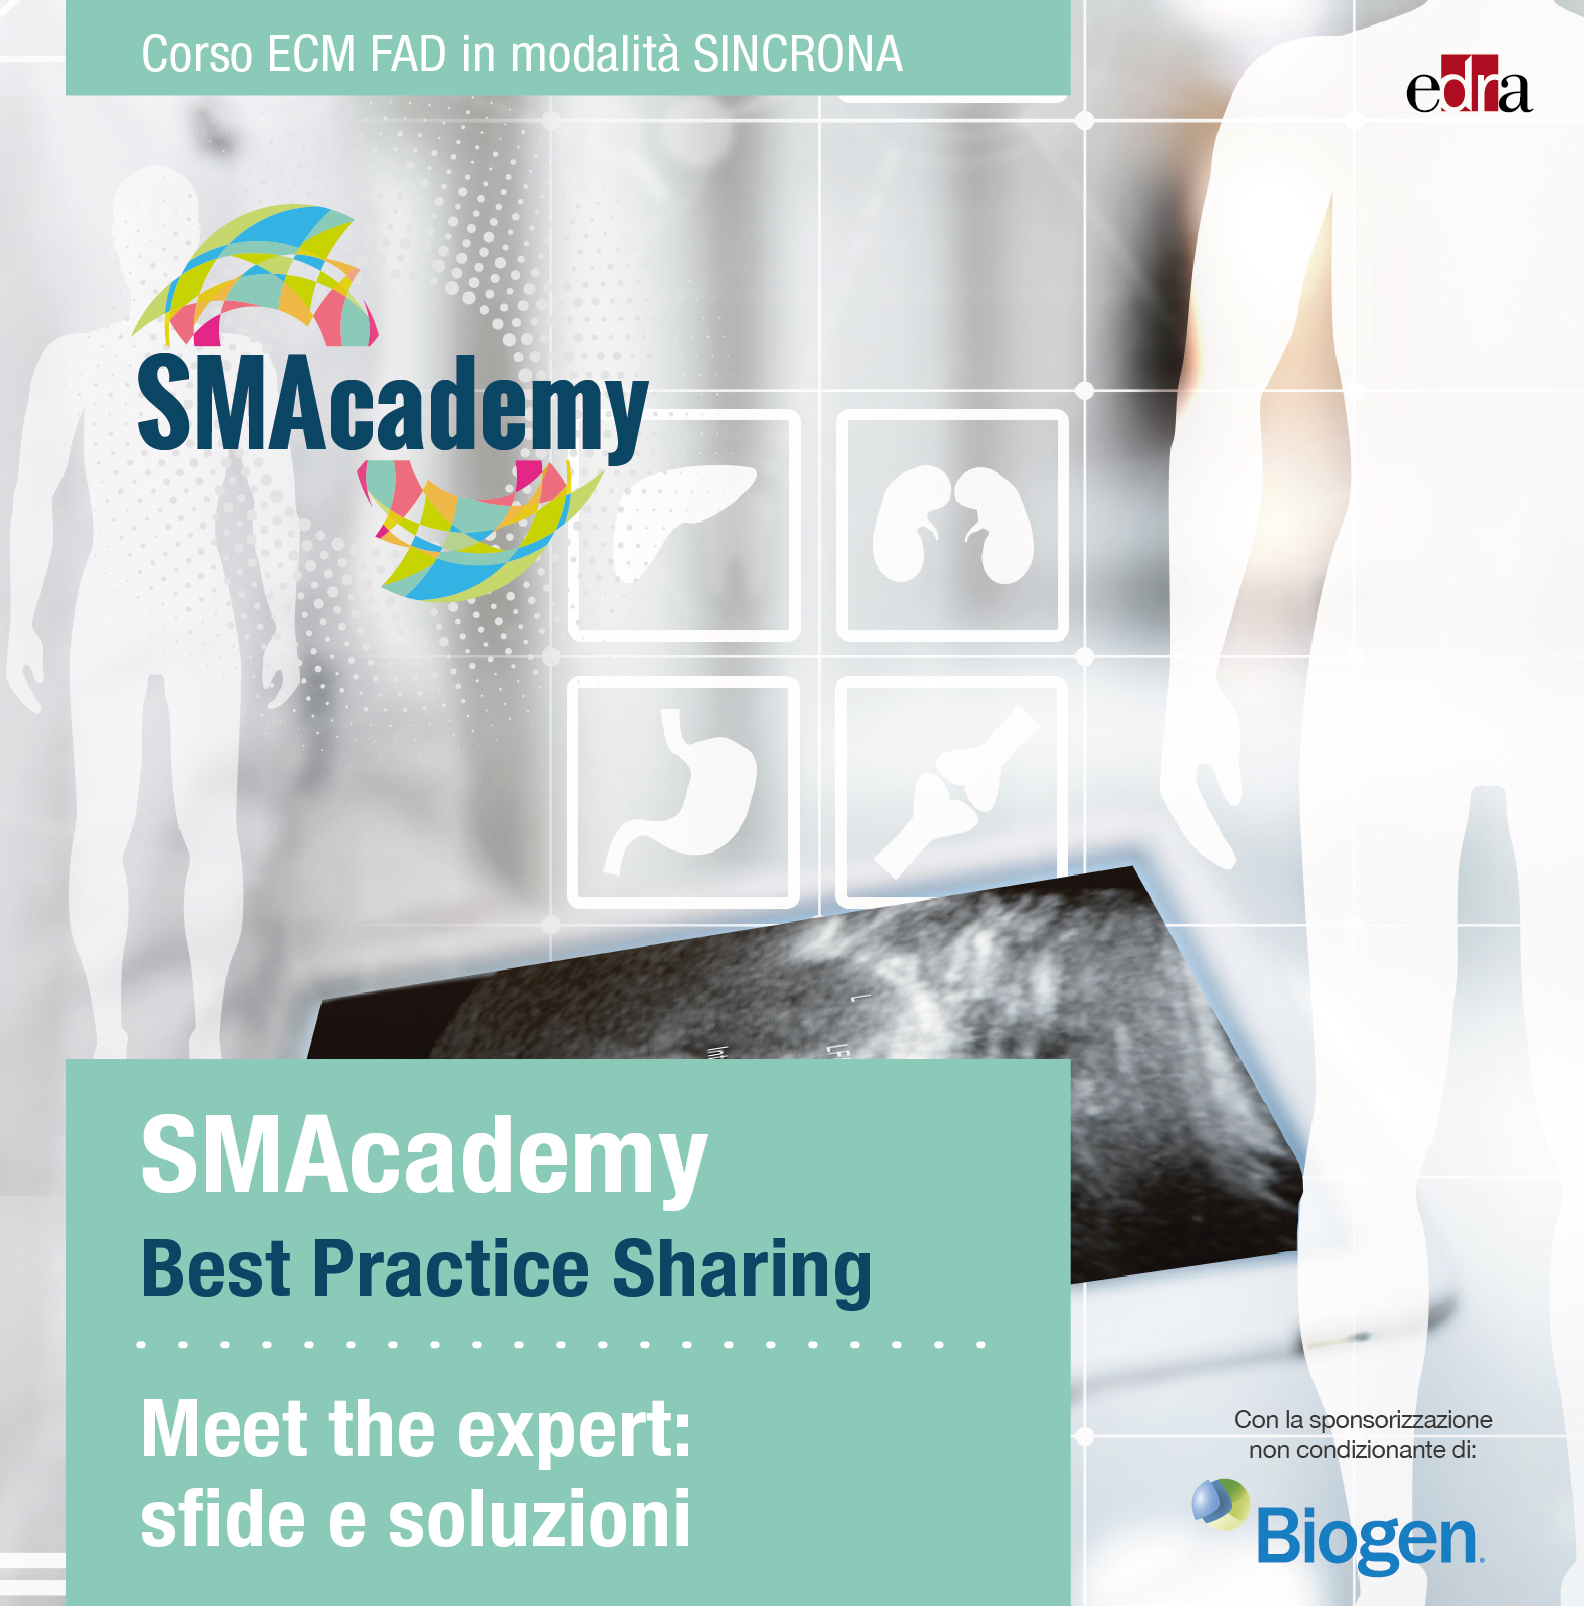 SMAcademy - Best Practice Sharing “Meet the expert: sfide e soluzioni”